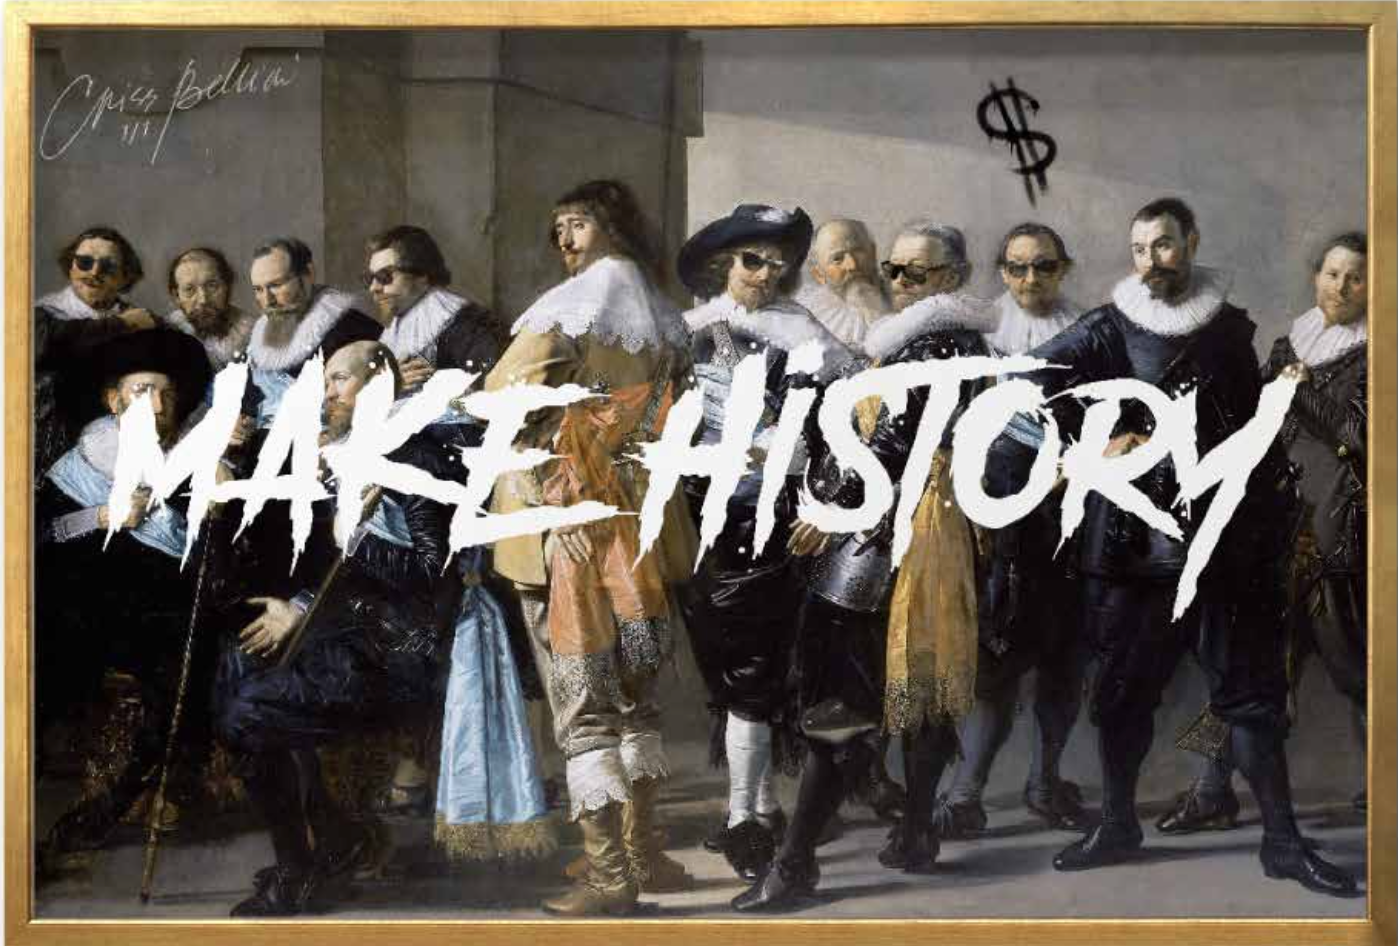 Make History